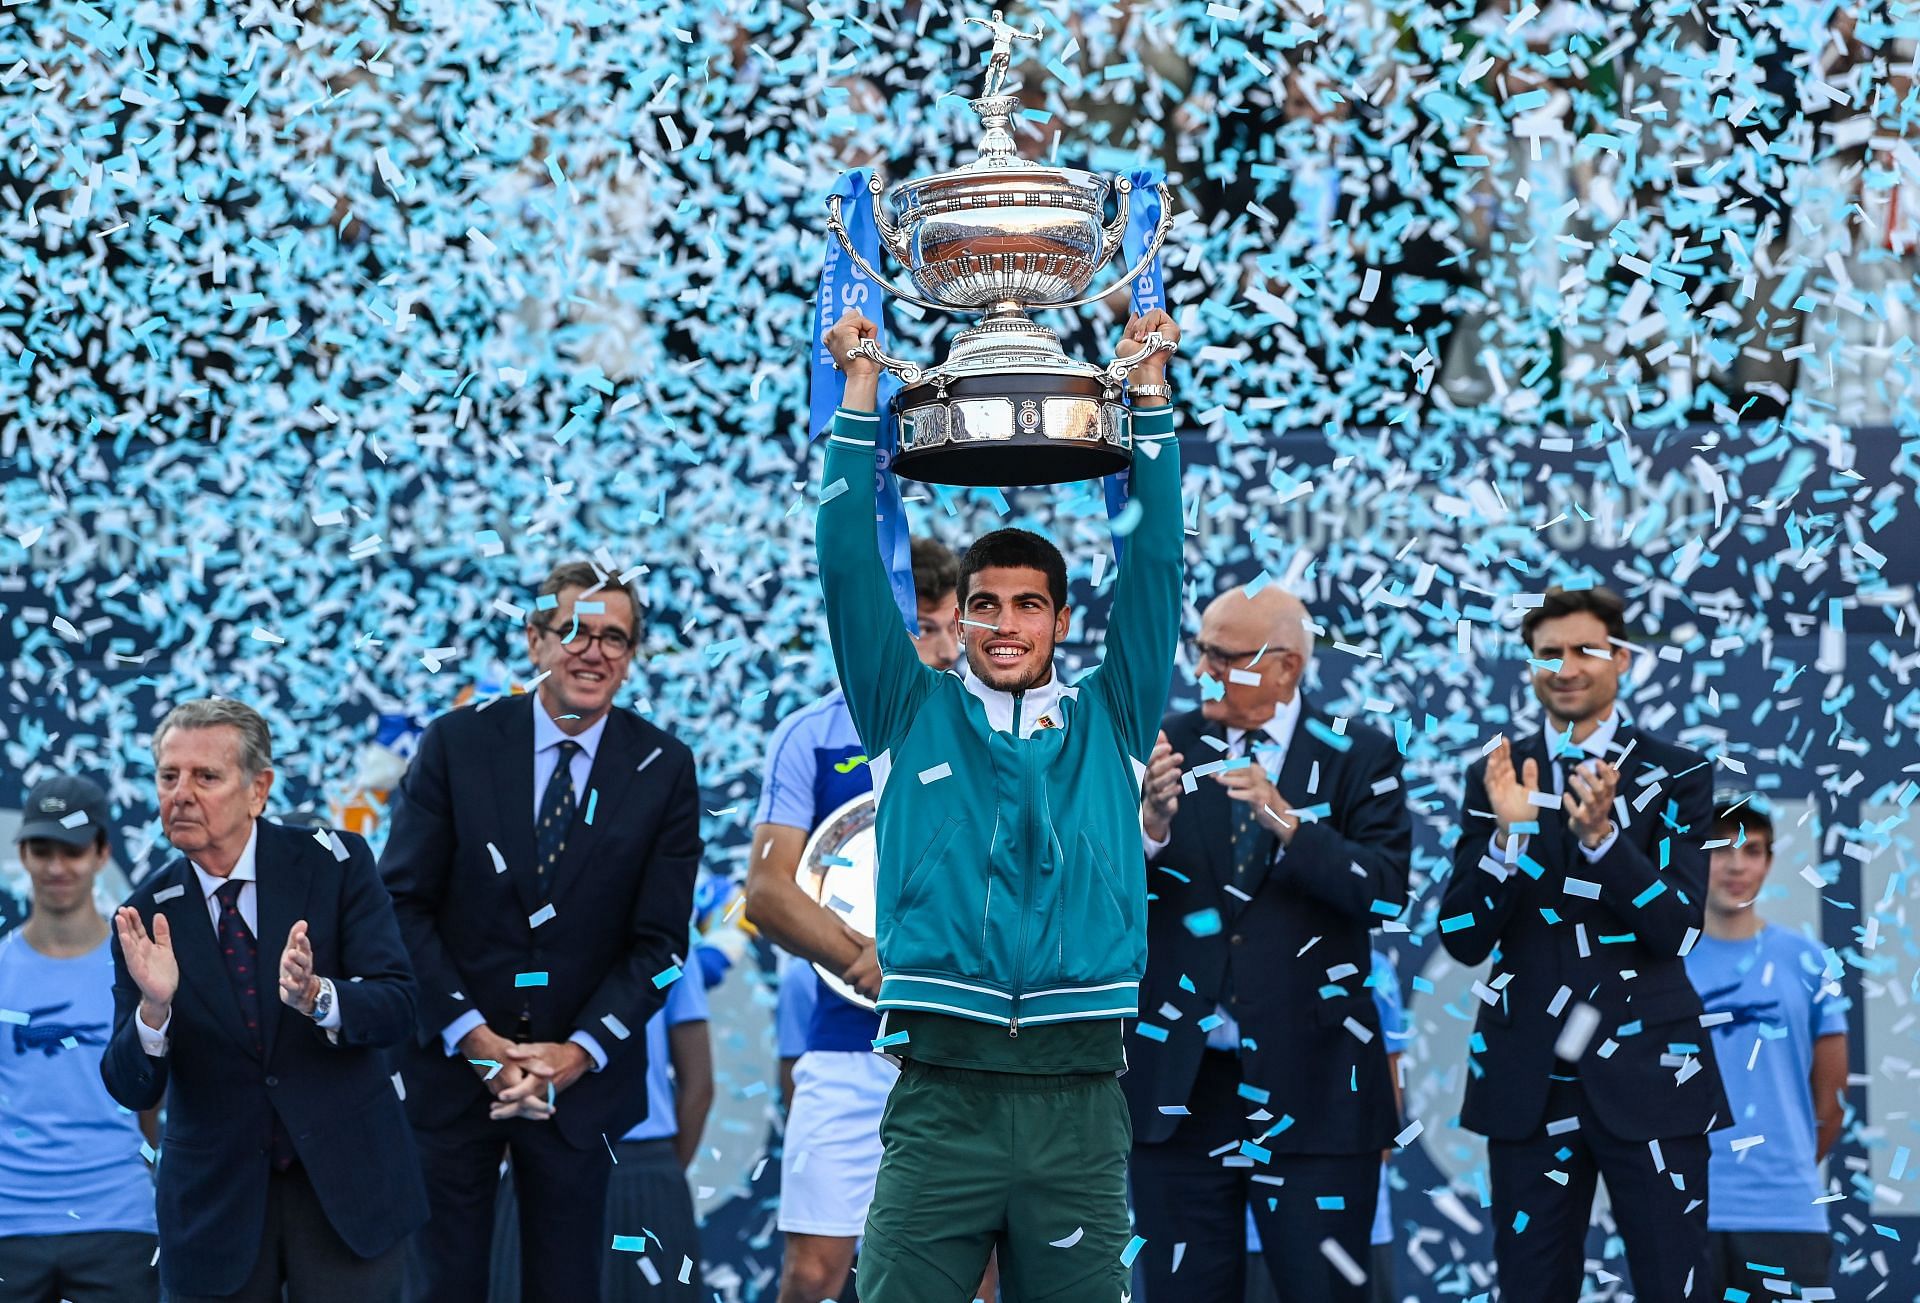 Carlos Alcaraz won the Barcelona Open